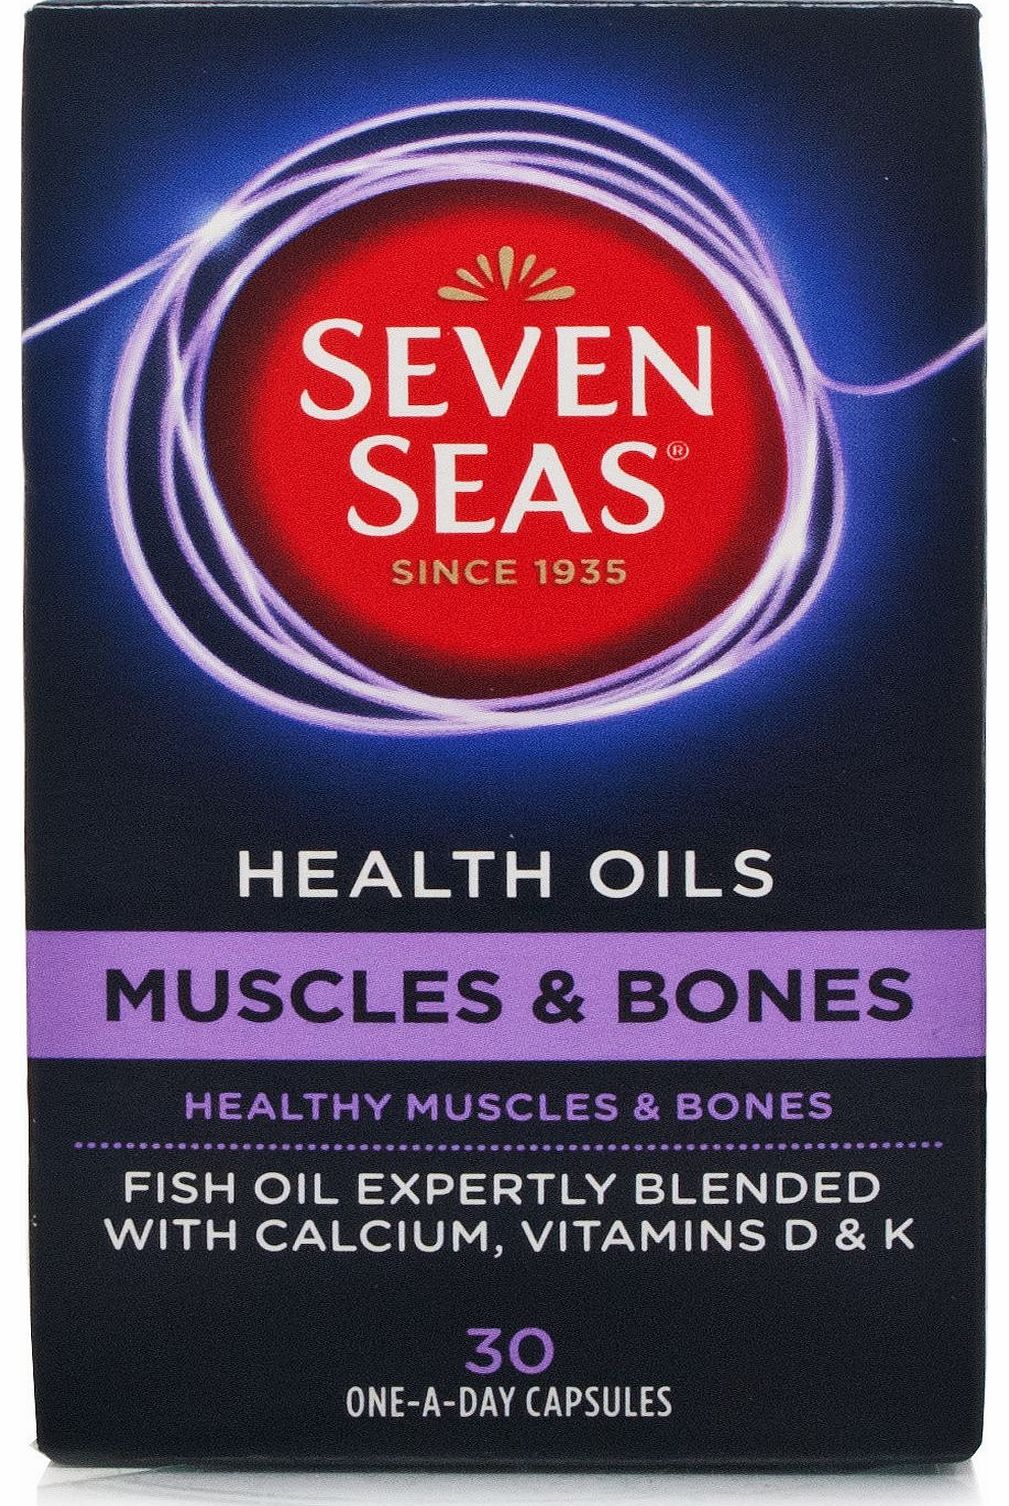 Seven Seas Health Oils Muscles & Bones